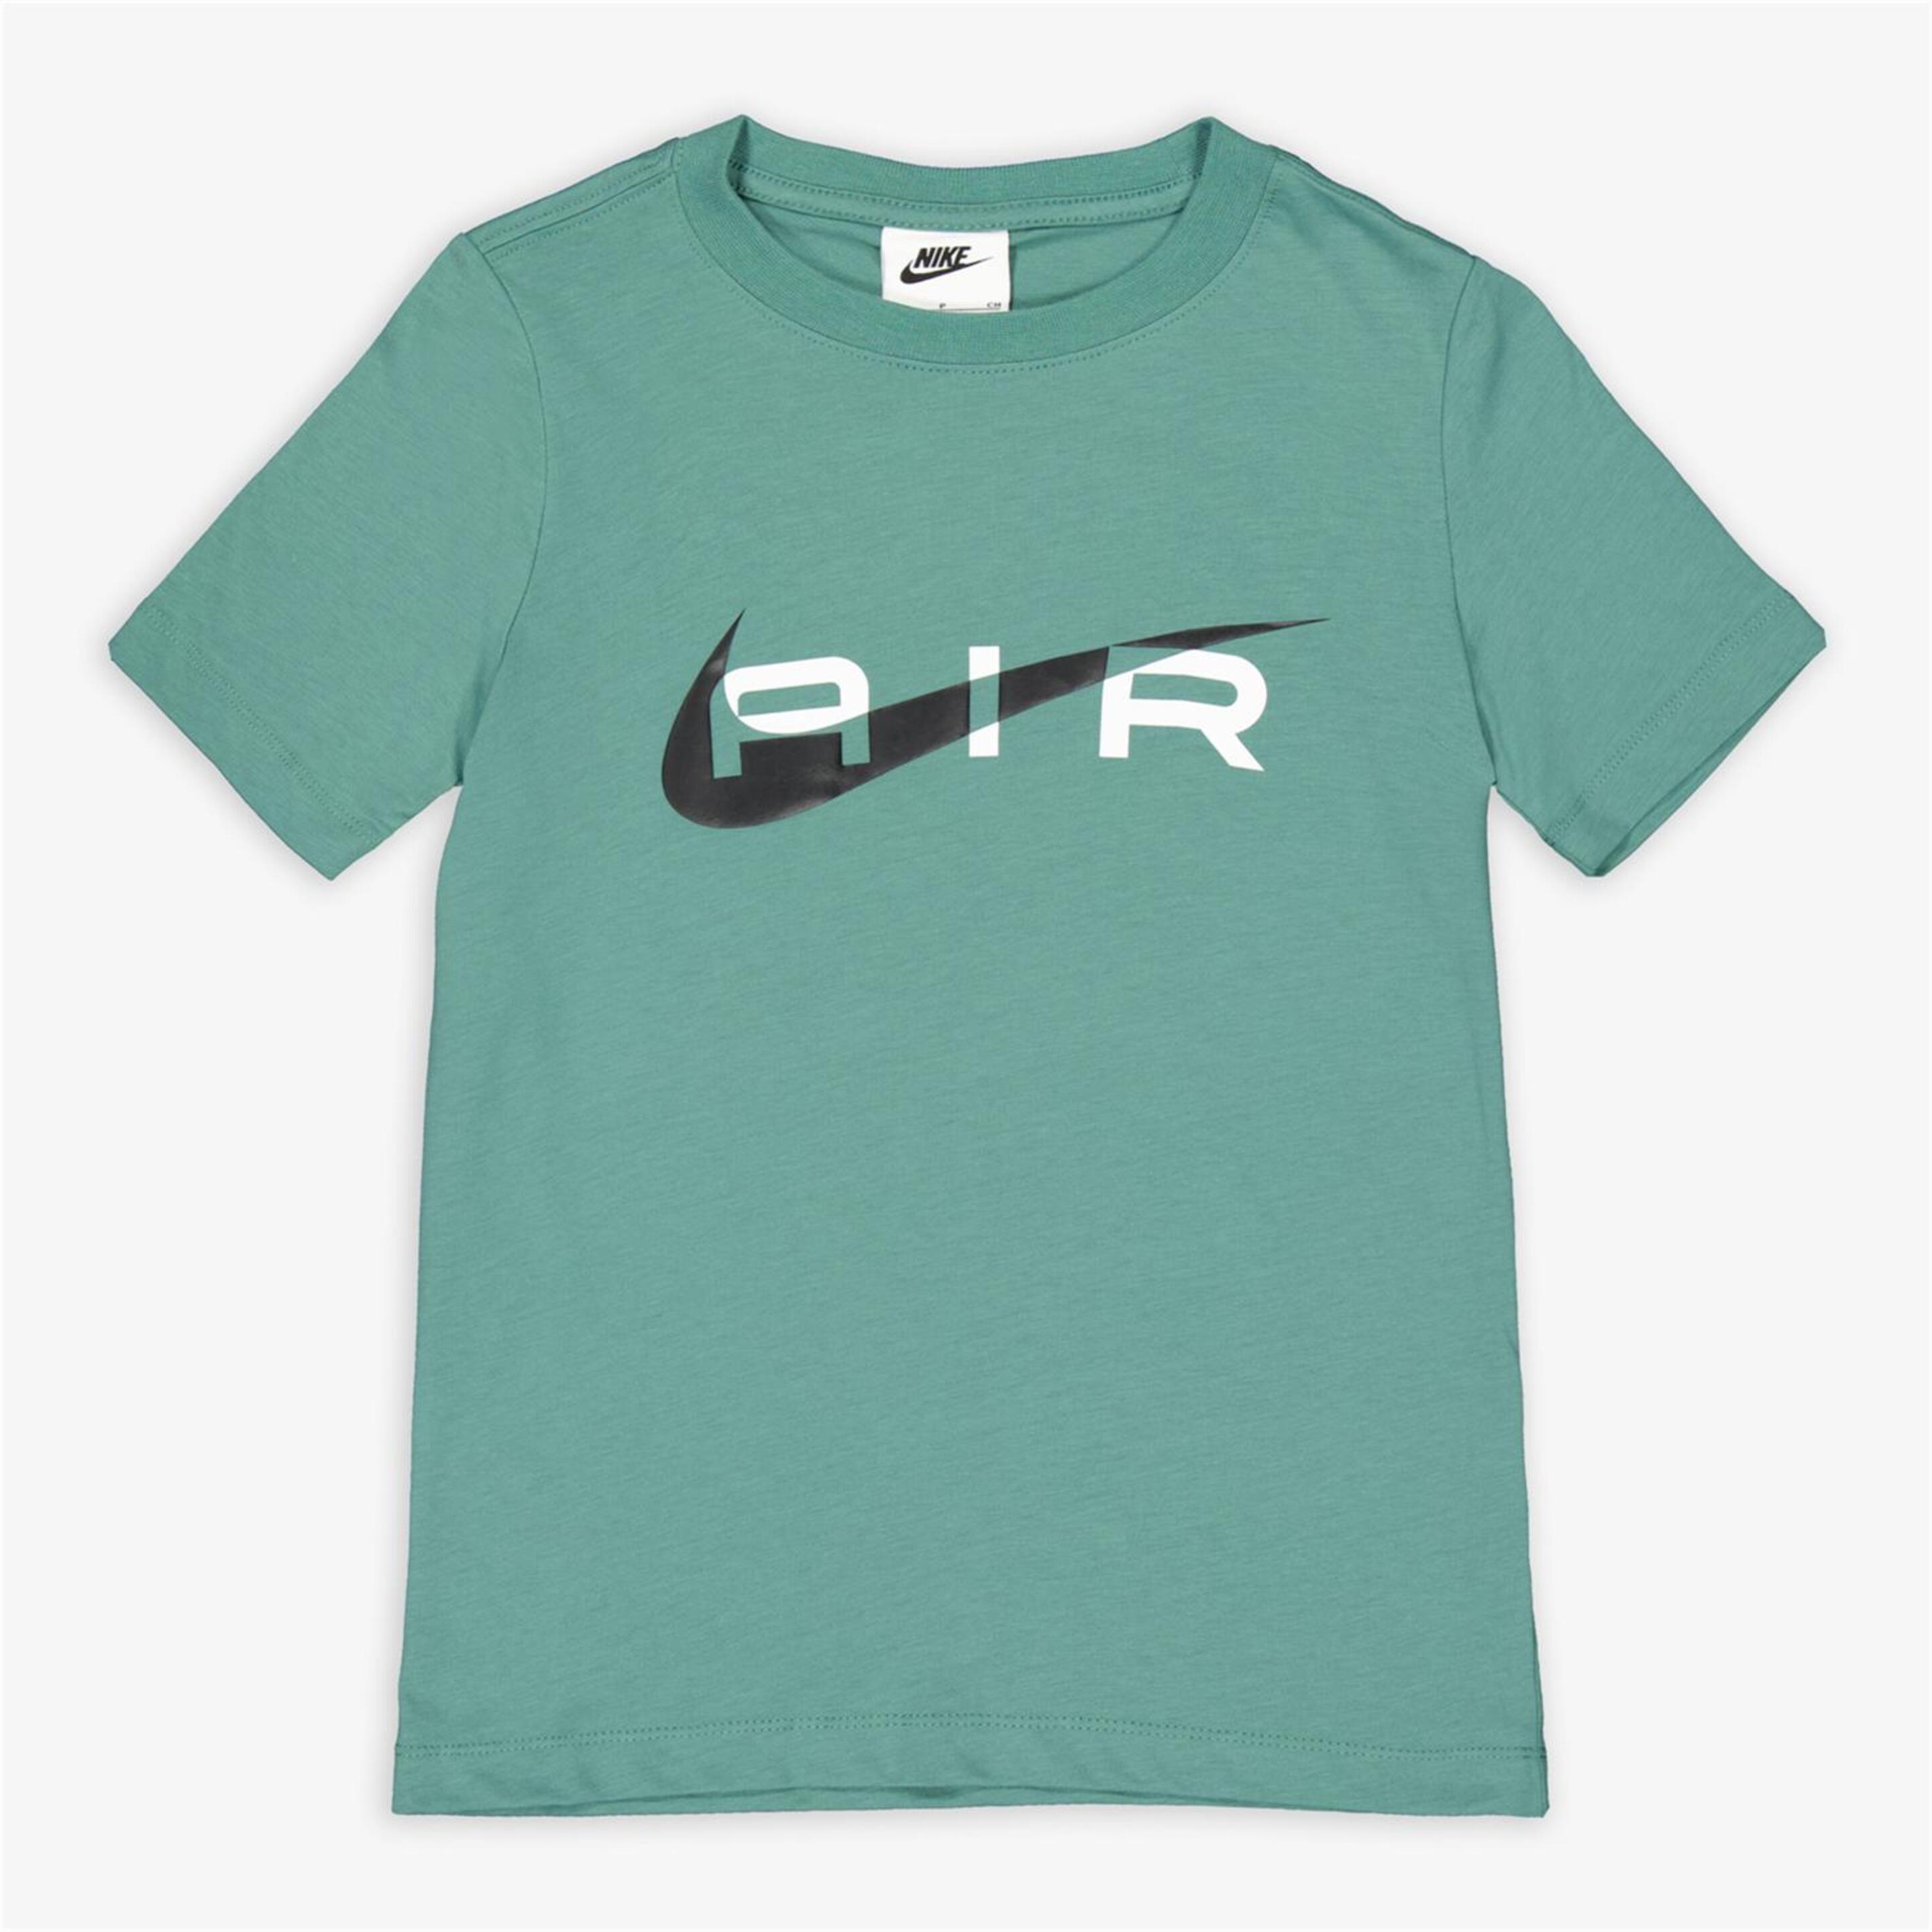 Camiseta Nike - verde - Camiseta Niño